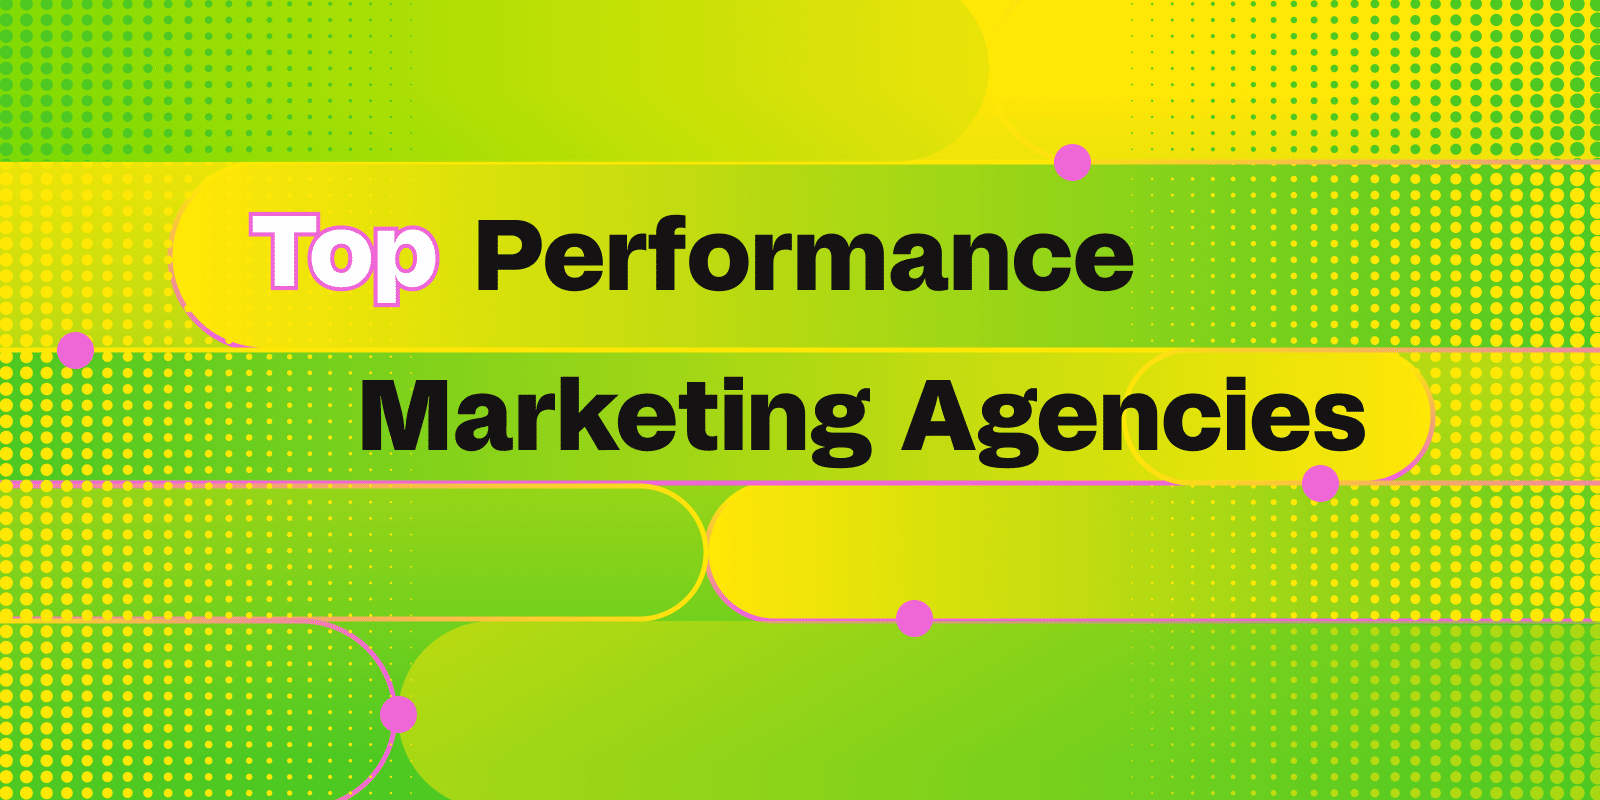 Top Performance Marketing Agencies